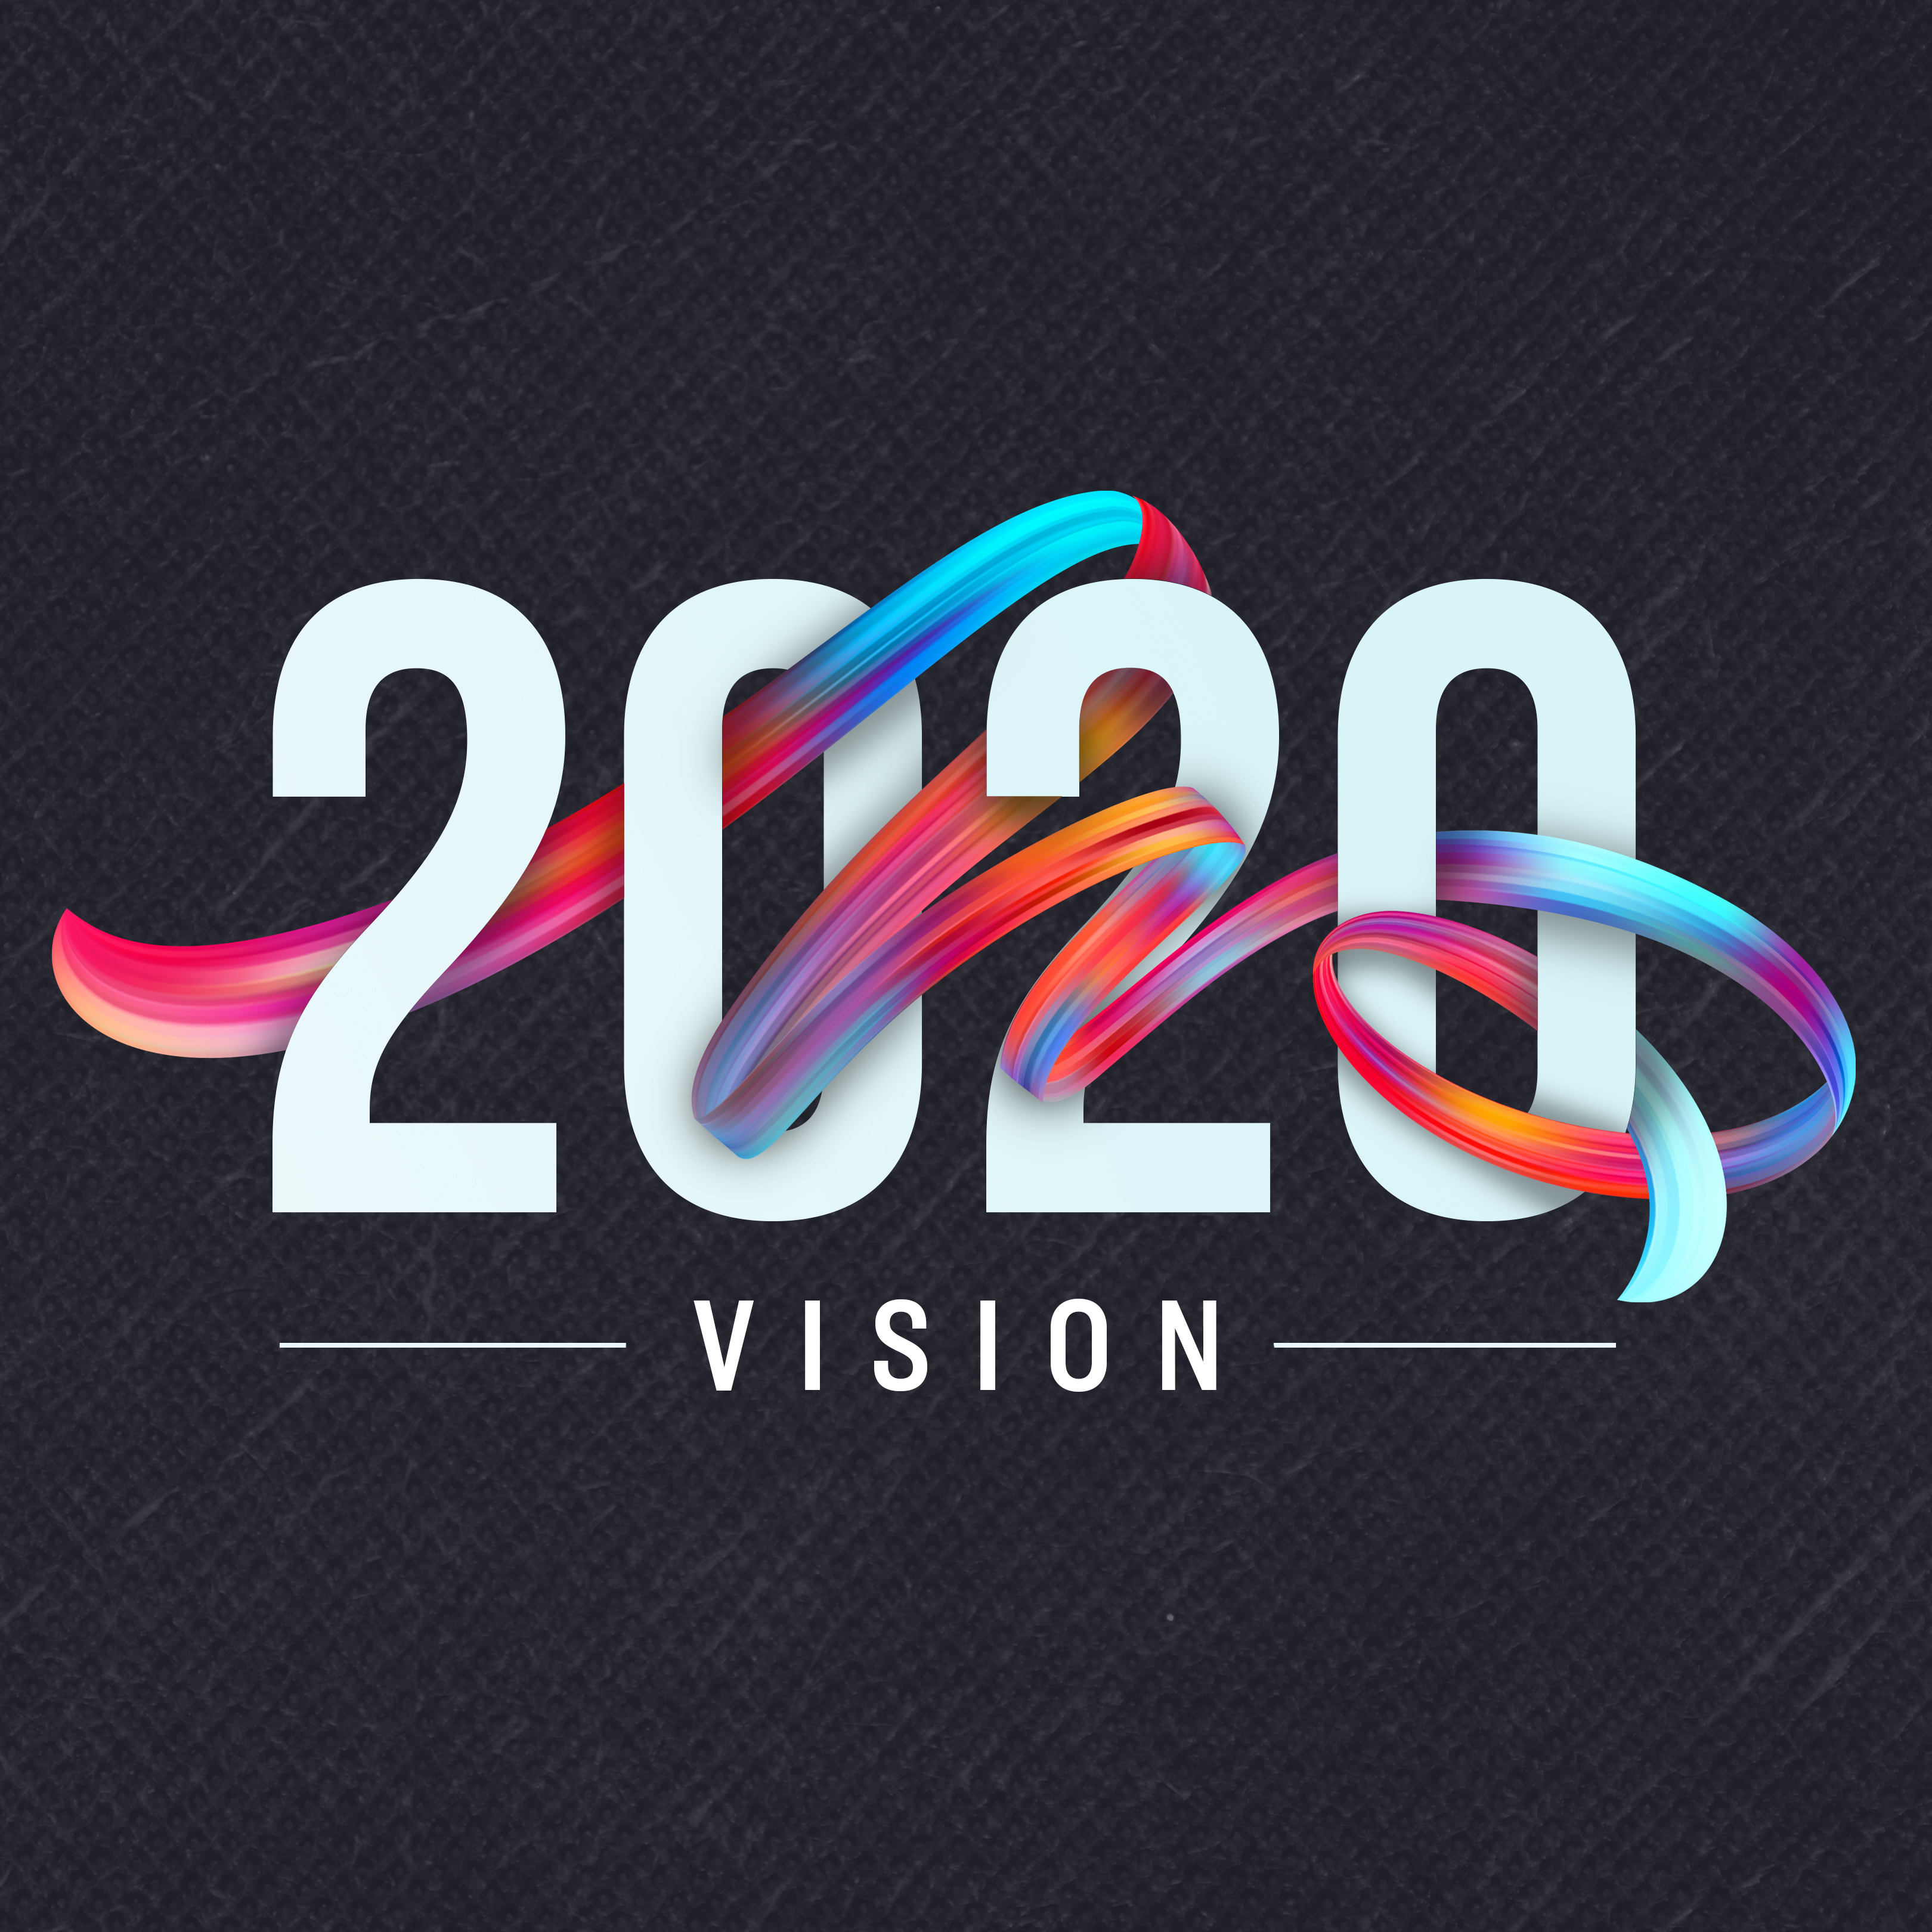 apta 2020 vision